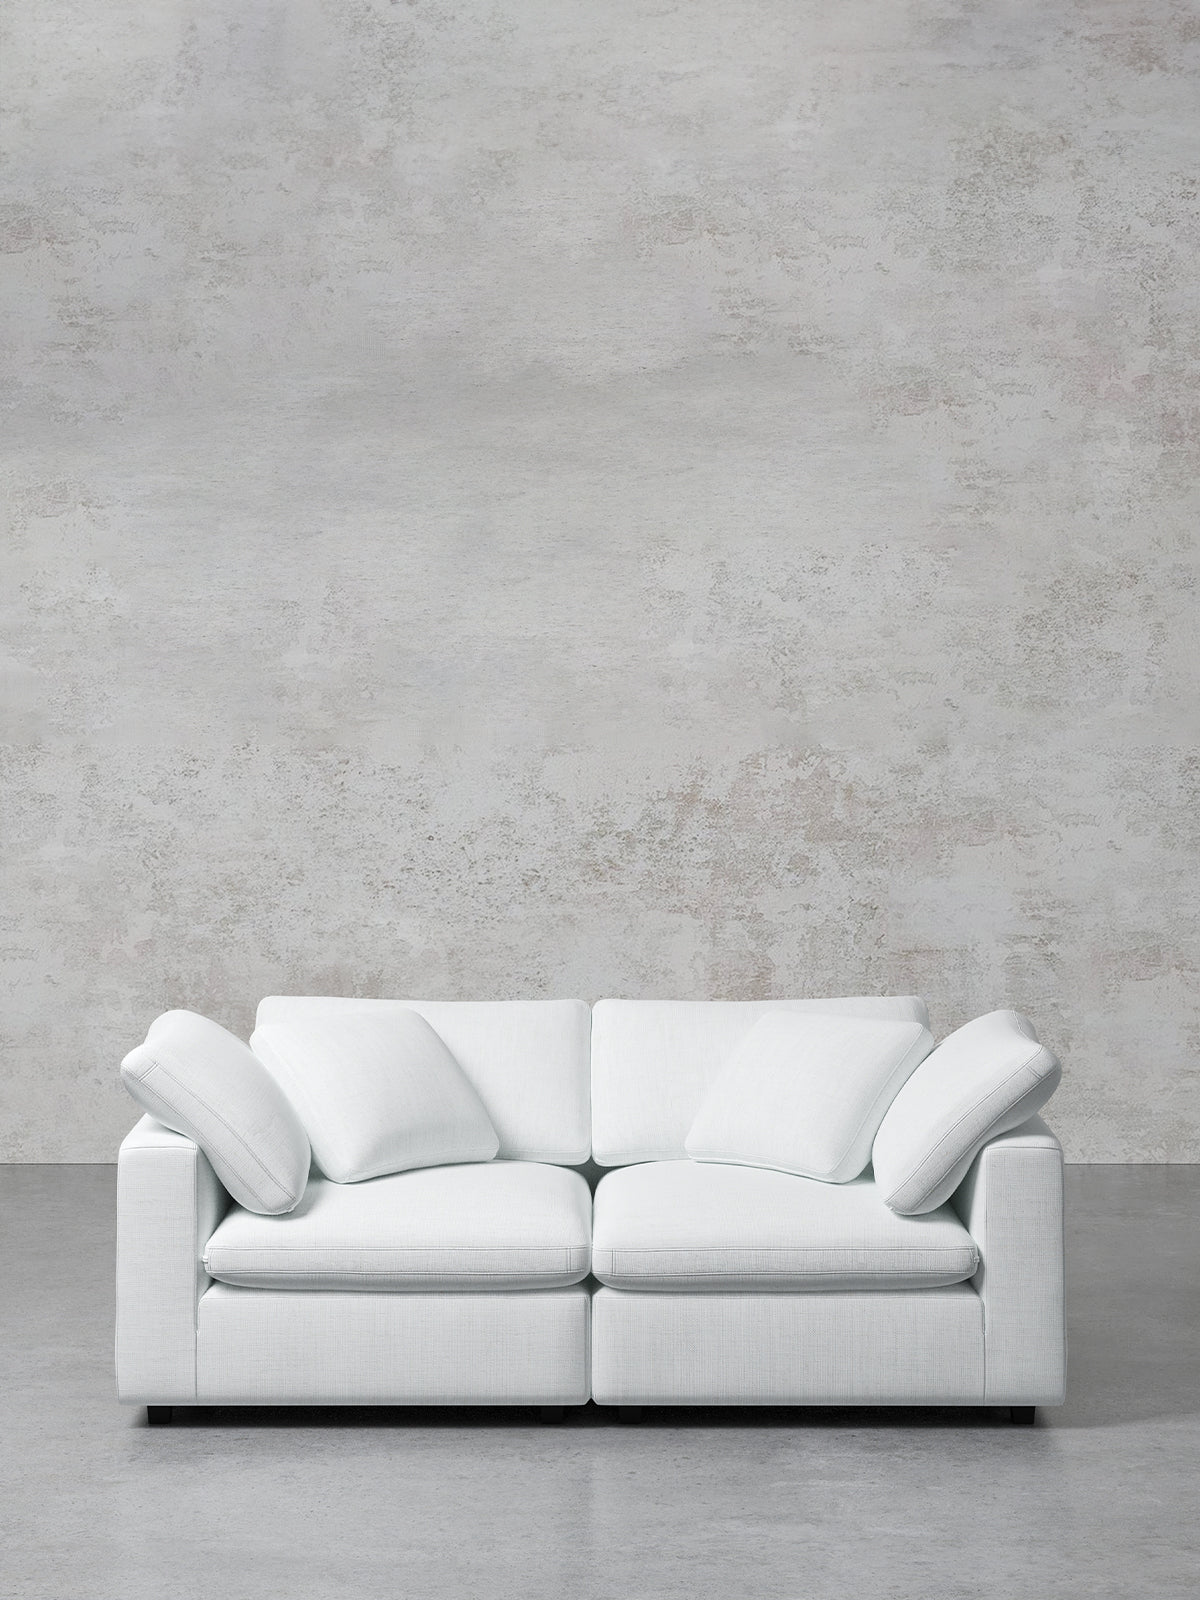 Couchhaus Customizable Modular Furniture